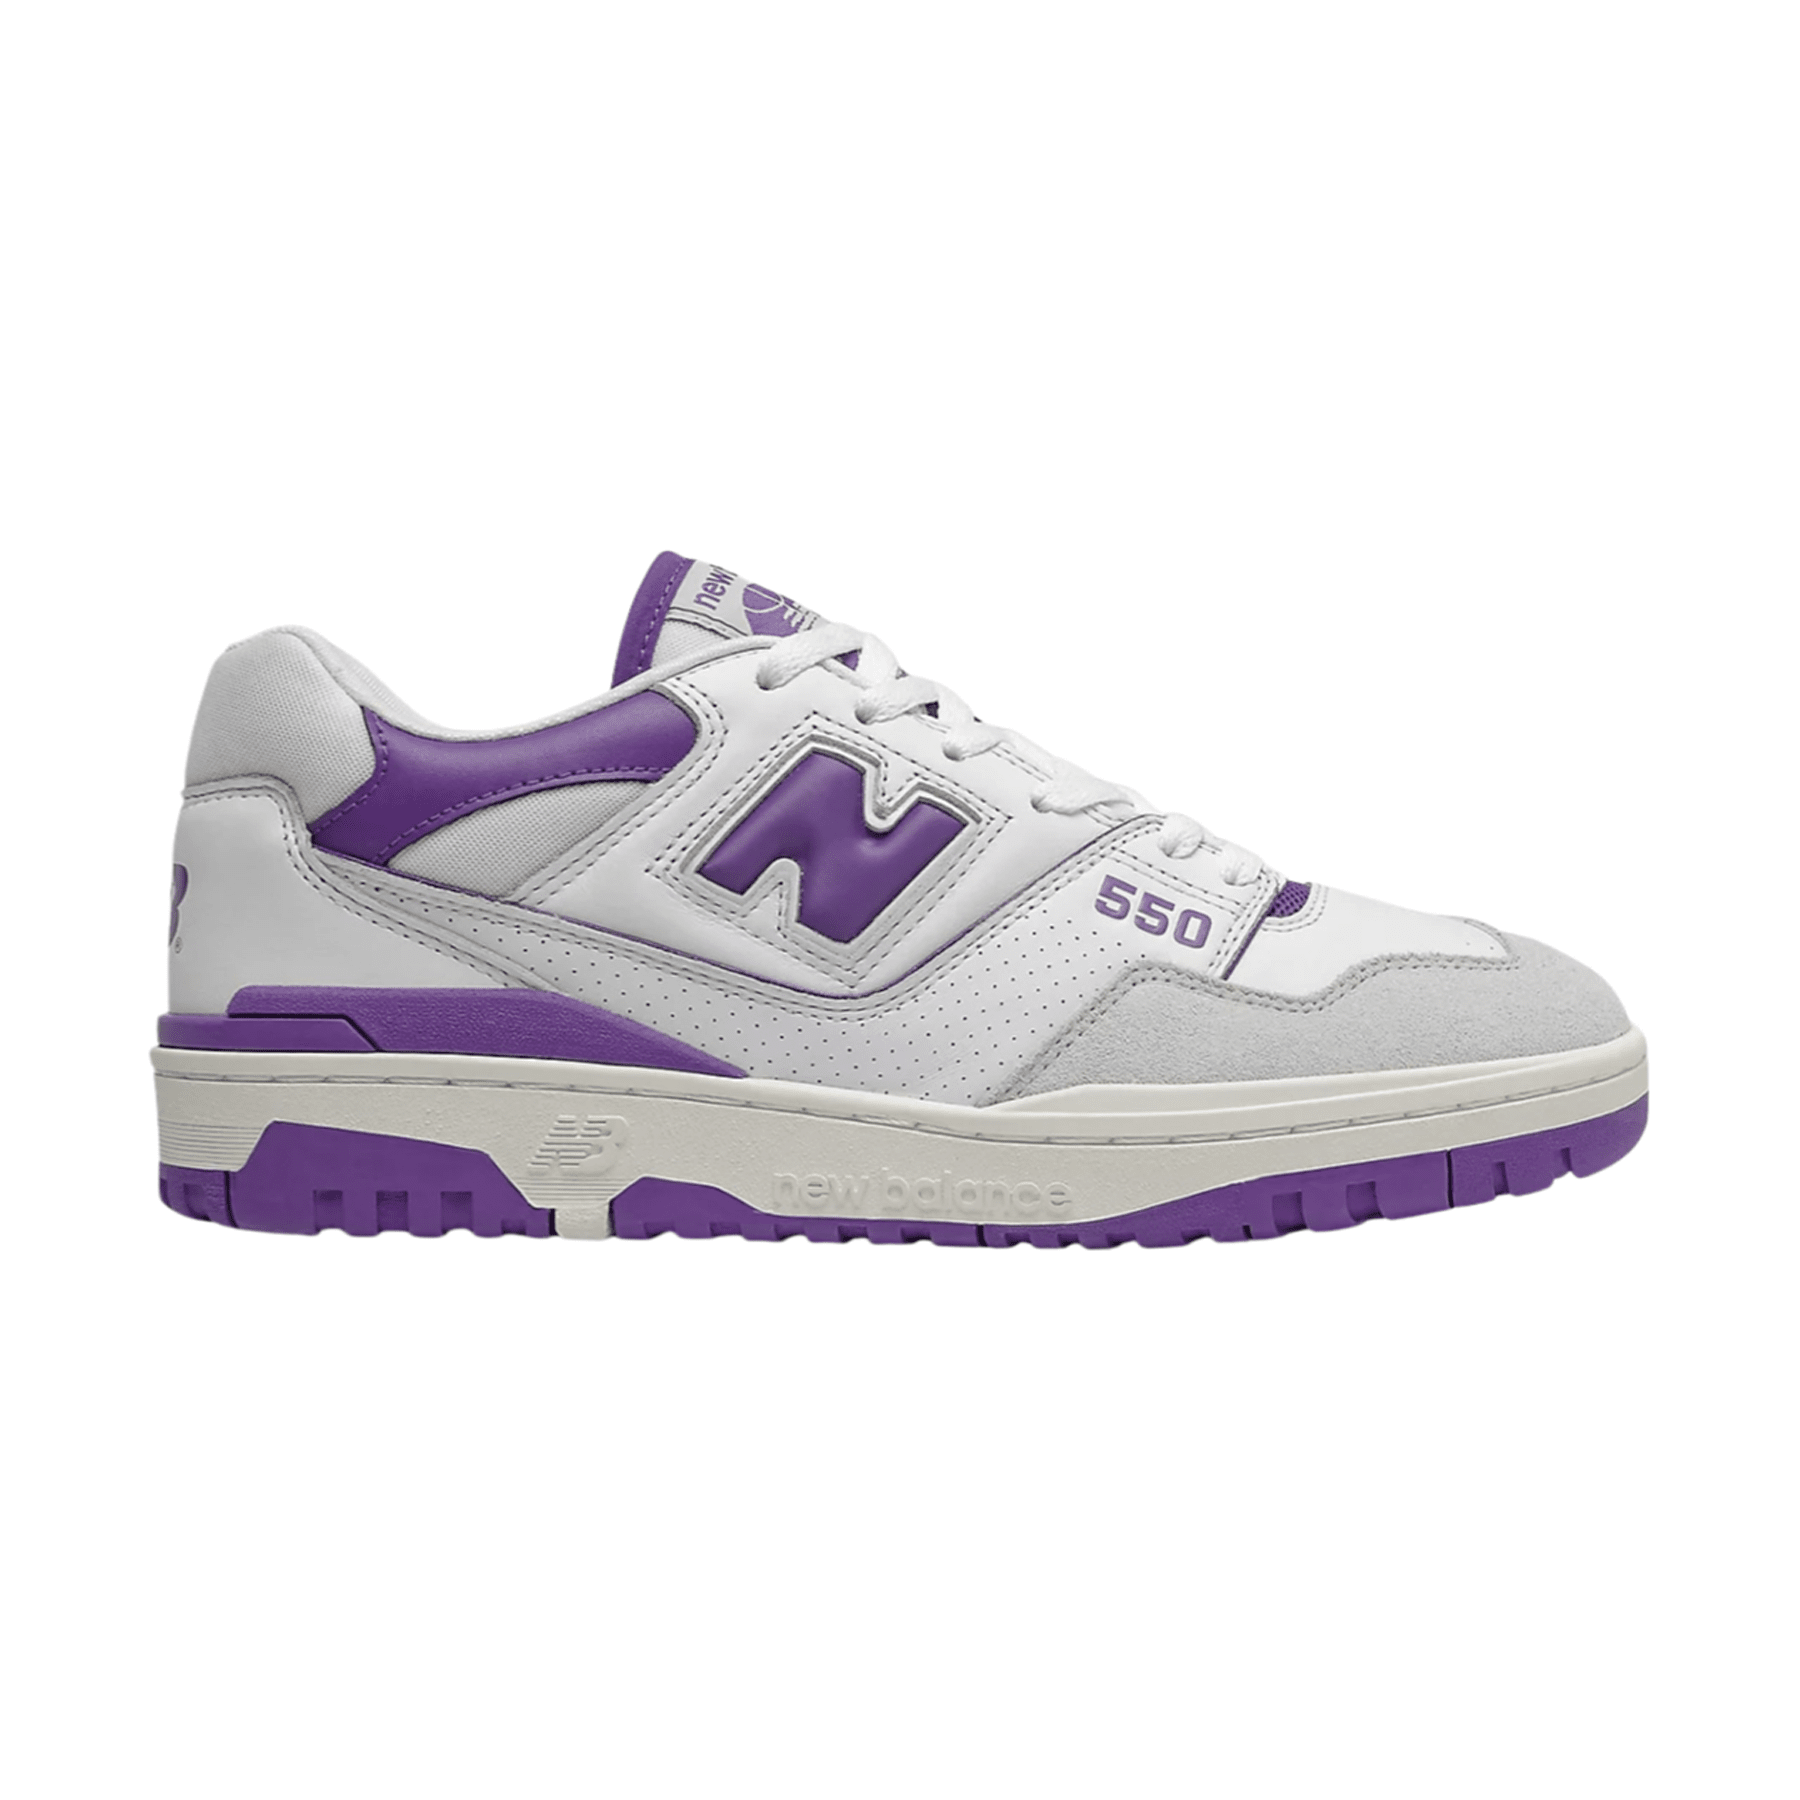 New Balance 550 Purple